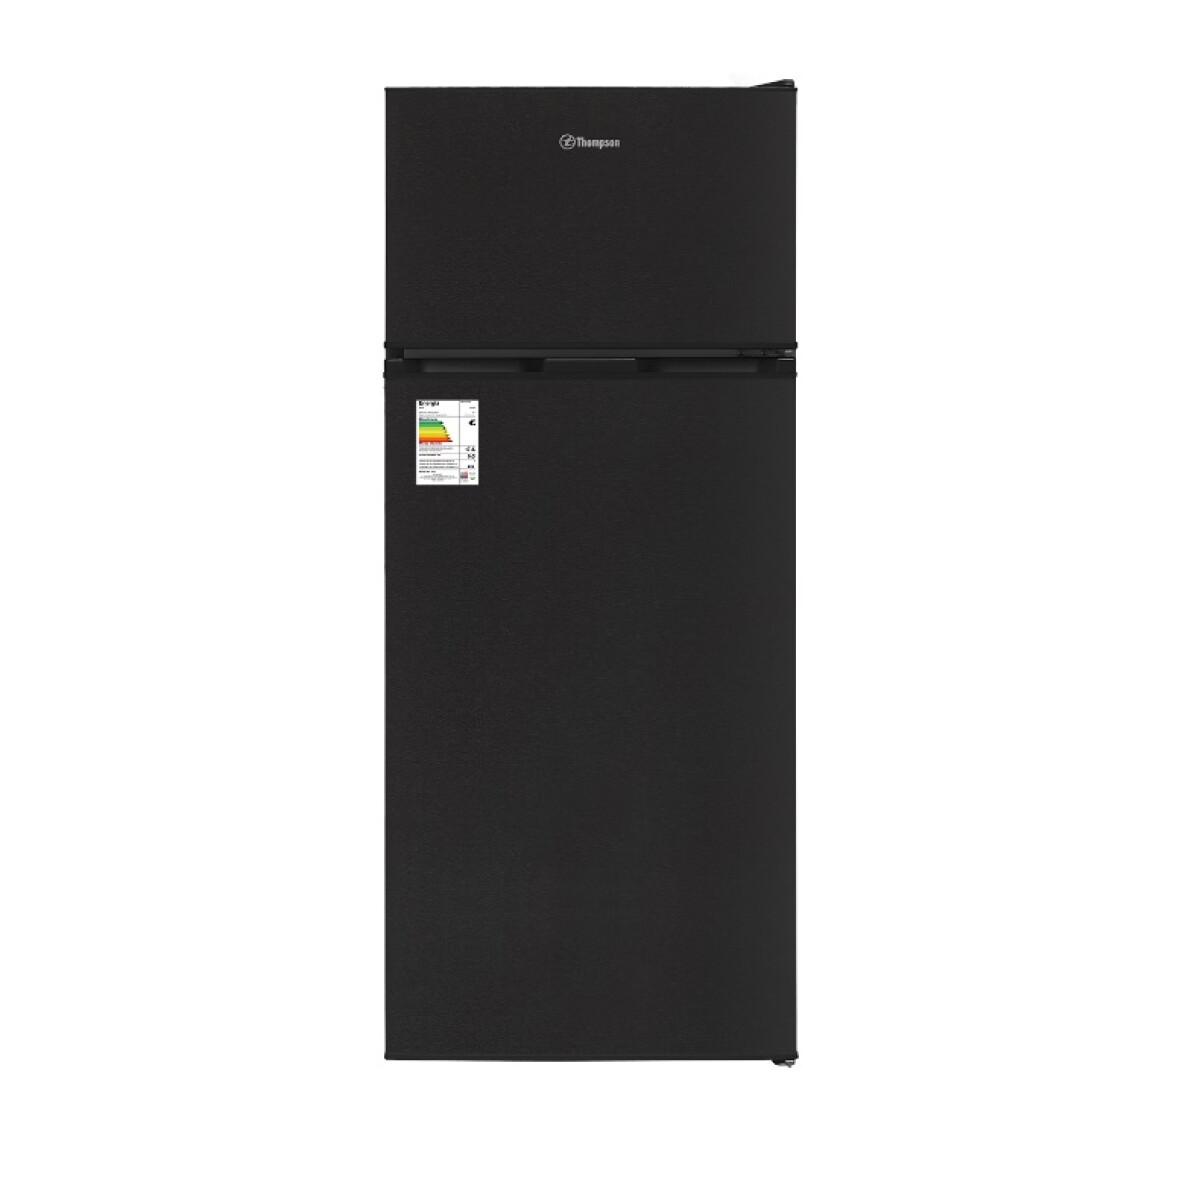 Refrigerador Thompson Rth 210 Dark Inox Frio Natural Albion - 001 